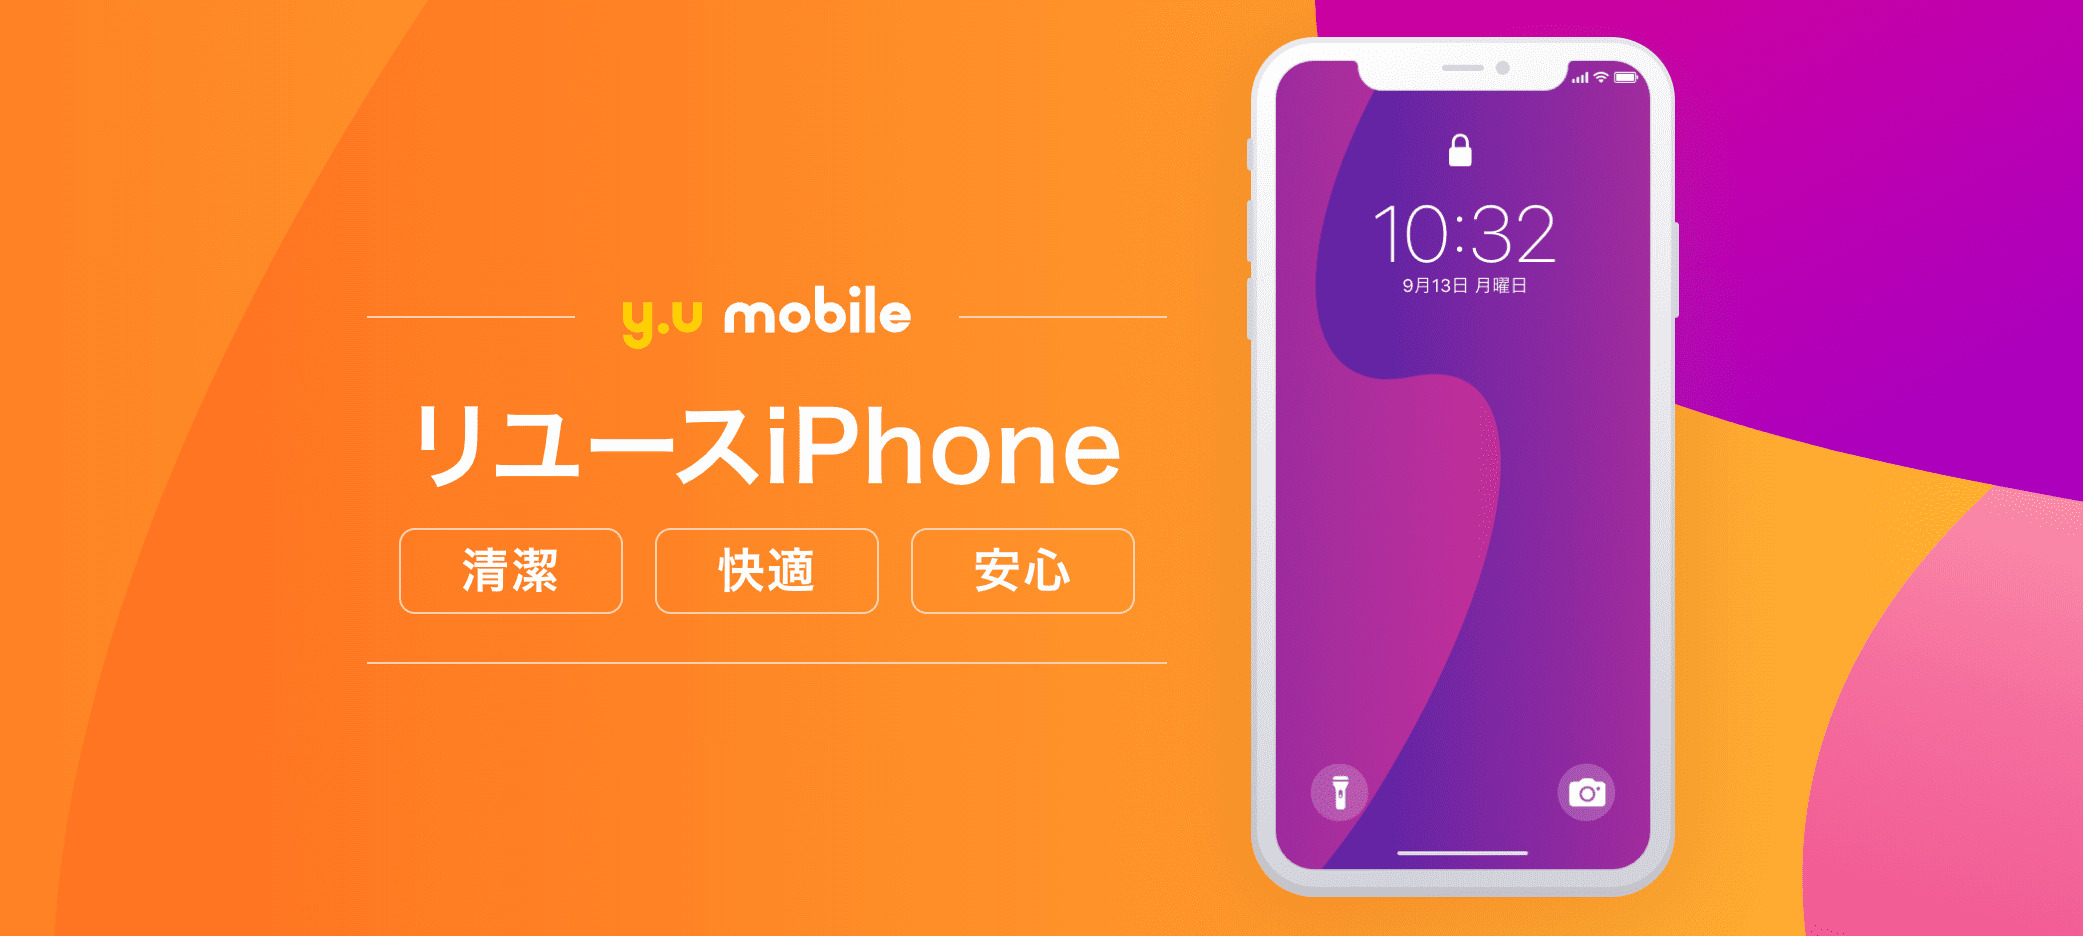 y.u mobile　リユースiPhone